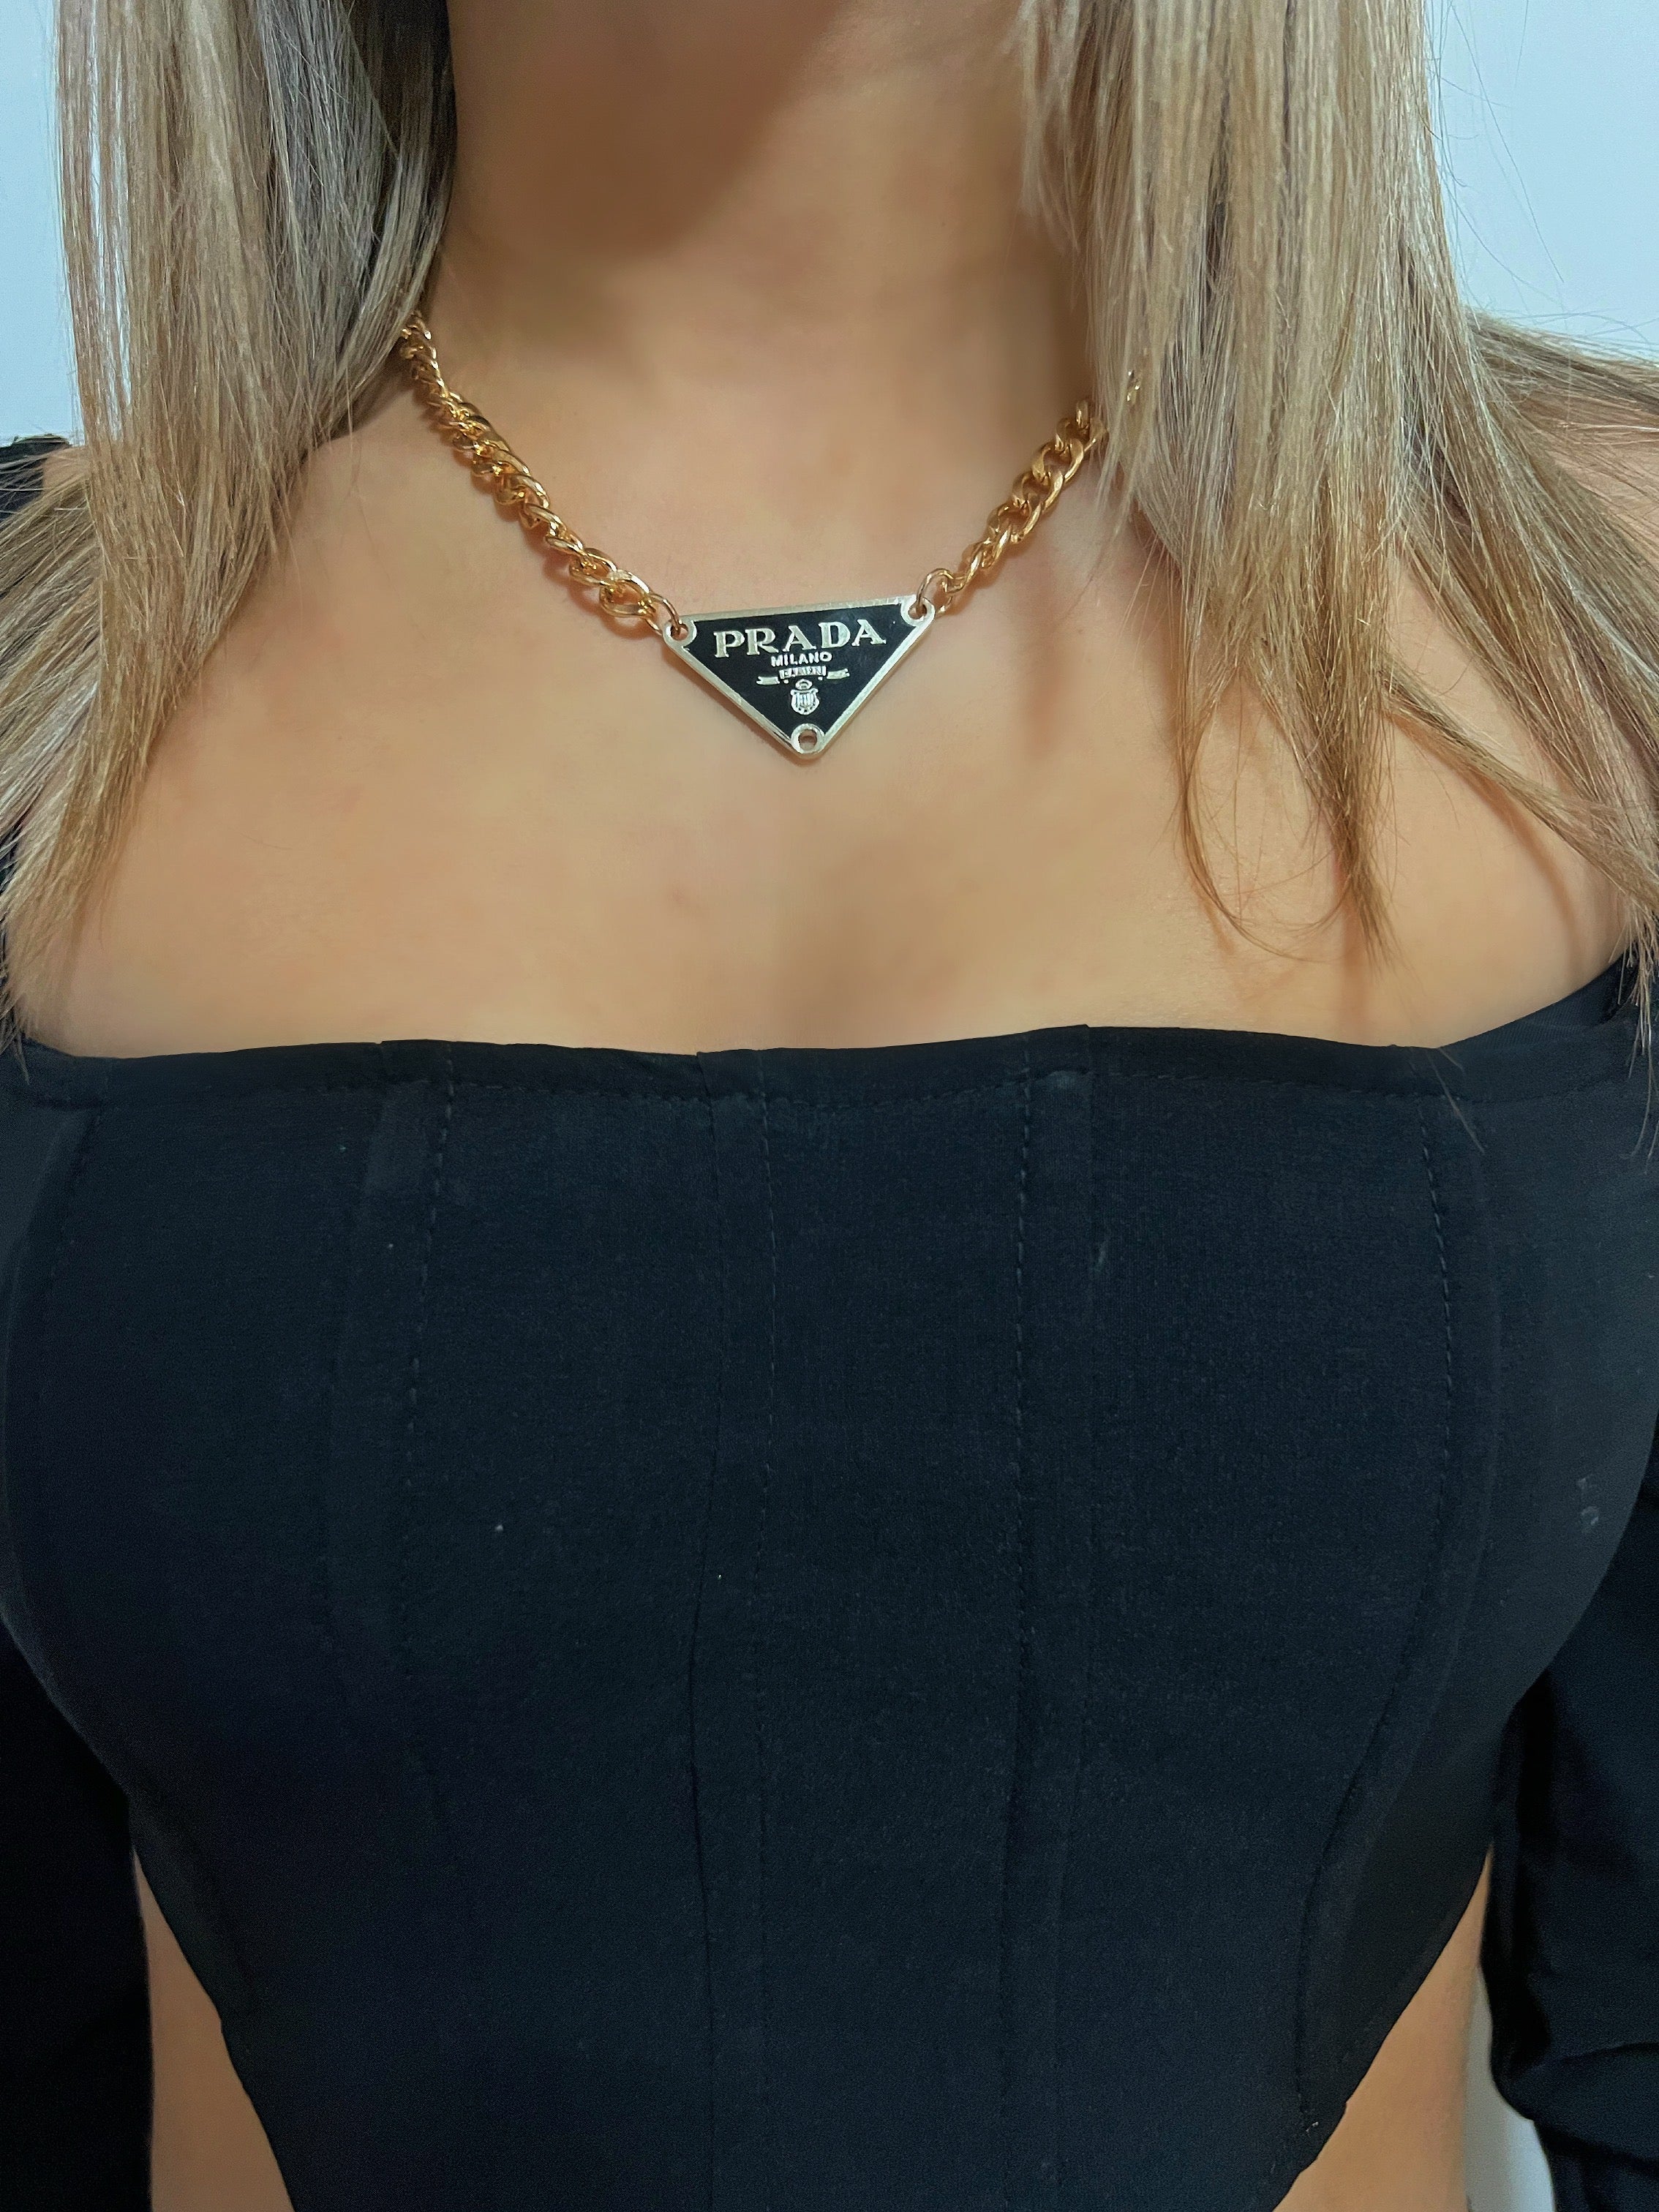 Prada Triangle Logo Repurposed Necklace | eBay